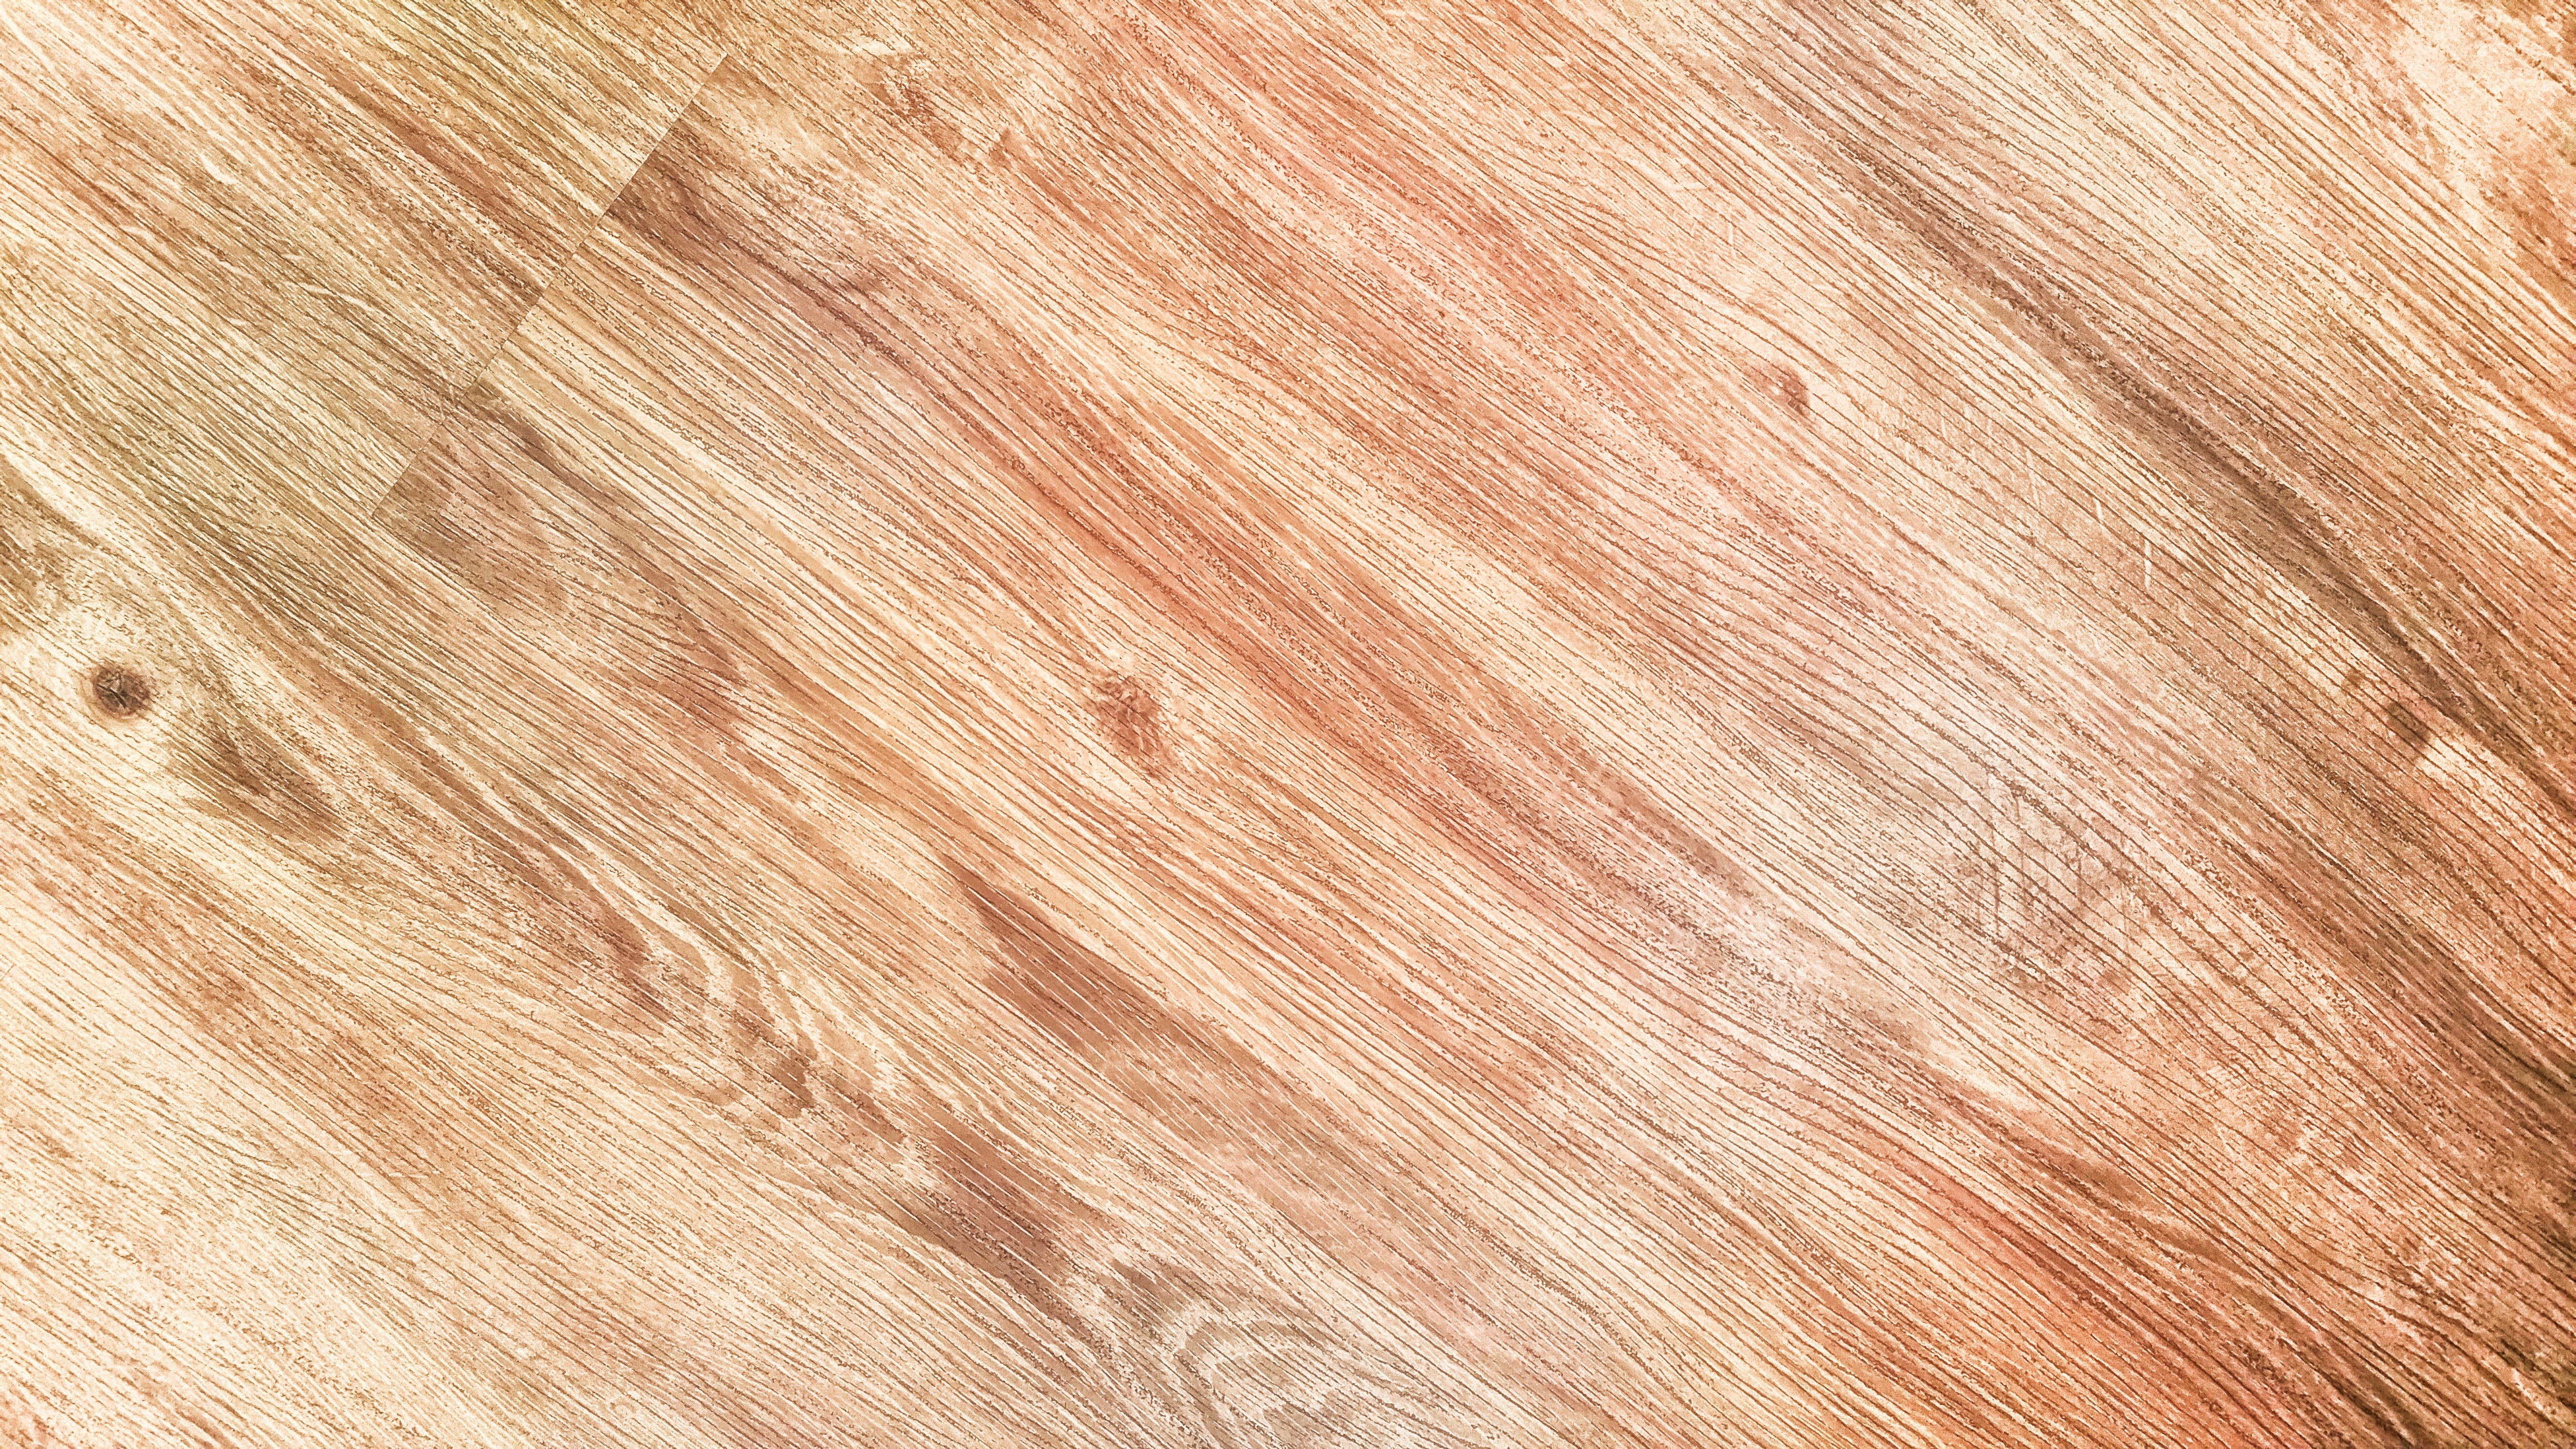 Brown Wooden Surface, Wood, Wooden planks, Wooden flooring, Wooden floor, HQ Photo